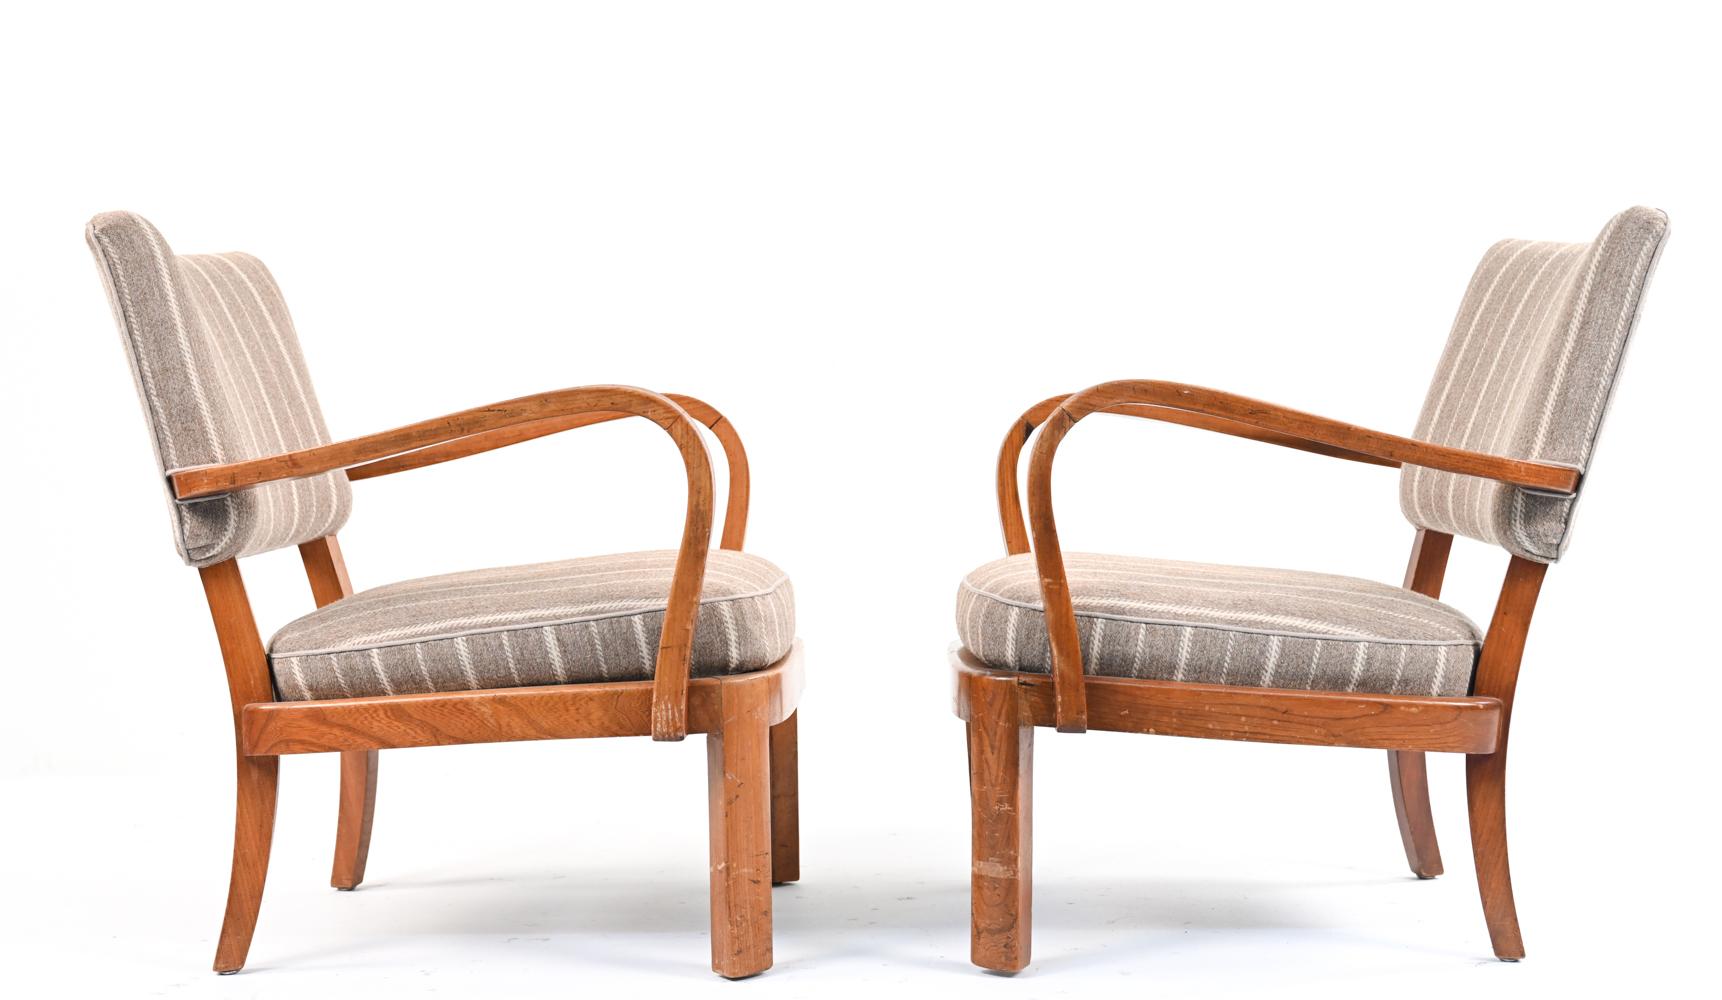 Pair of Scandinavian Elm Wood Bridge Chairs, 1940's-1950's For Sale 7